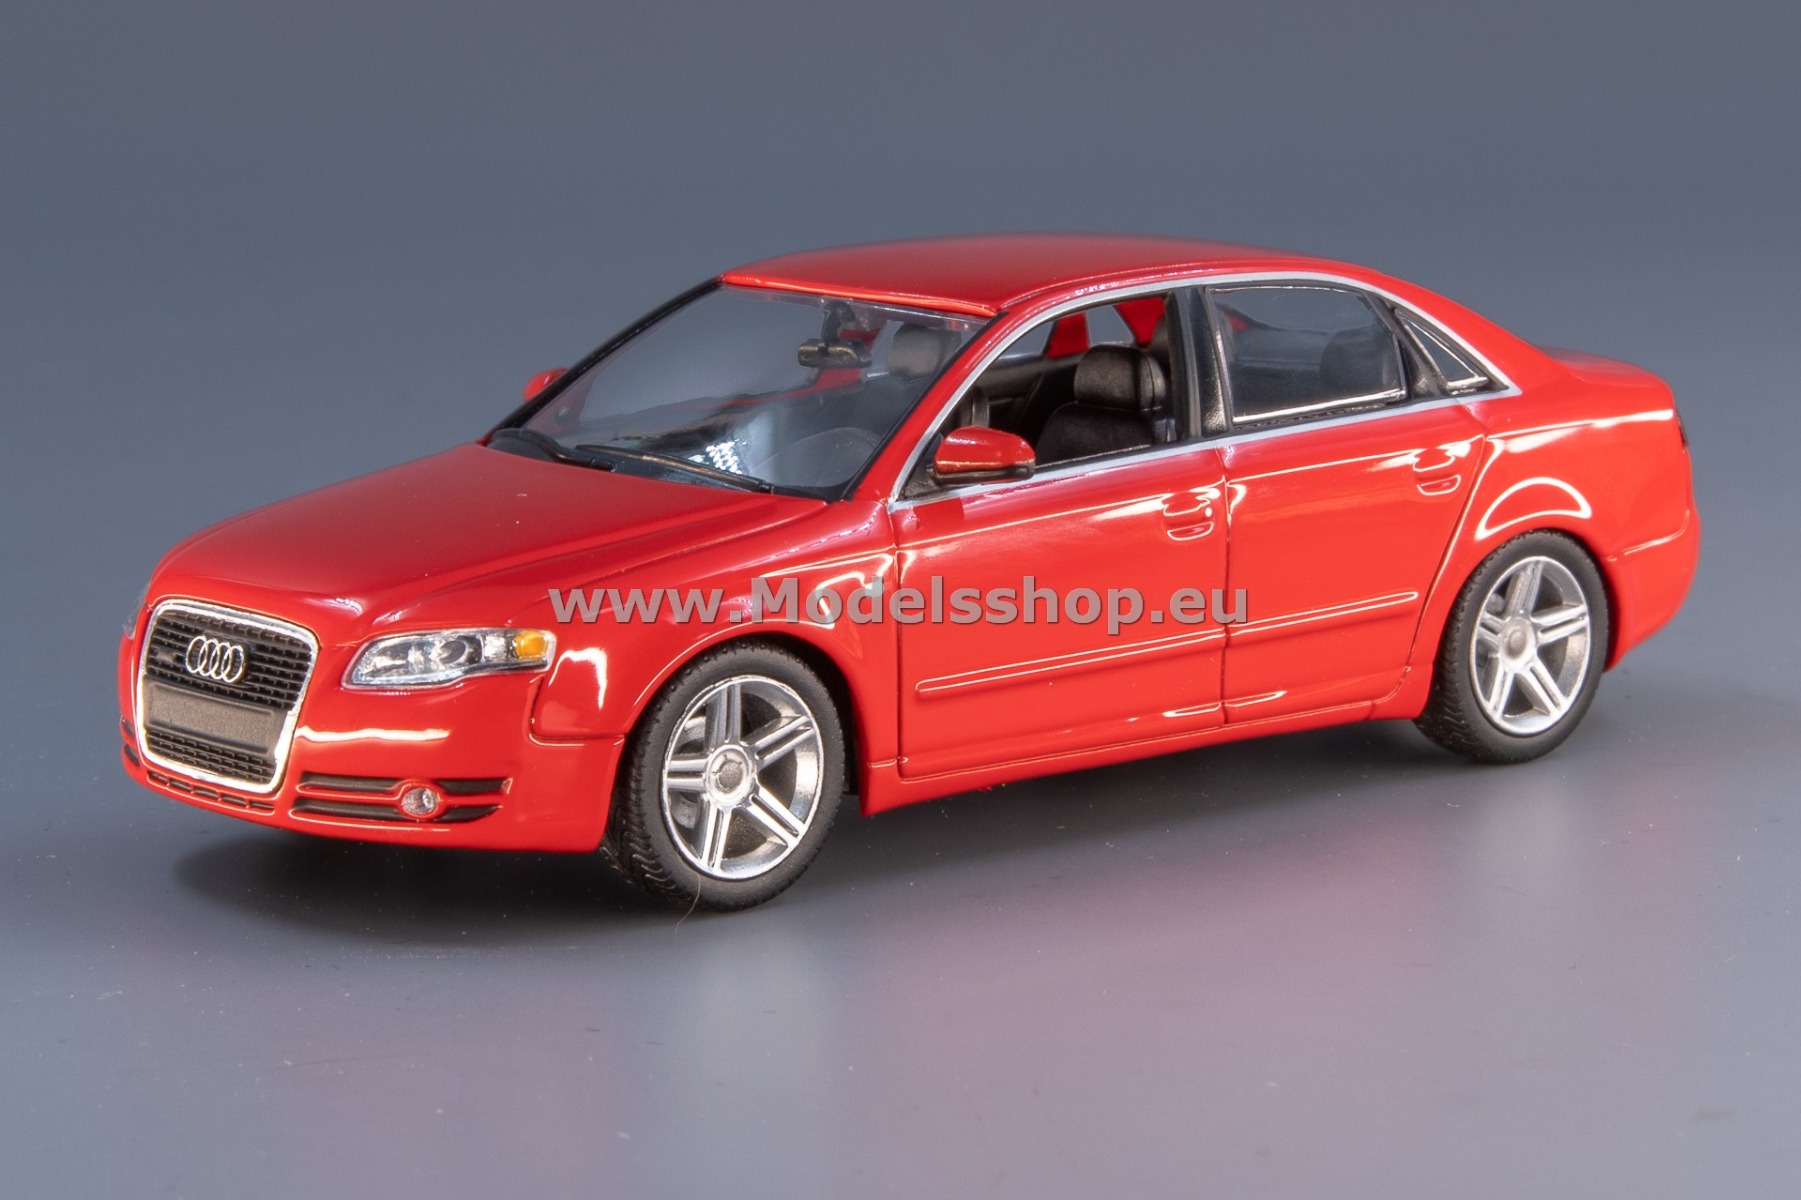 Maxichamps 940014401 Audi A4, 2004 /red/